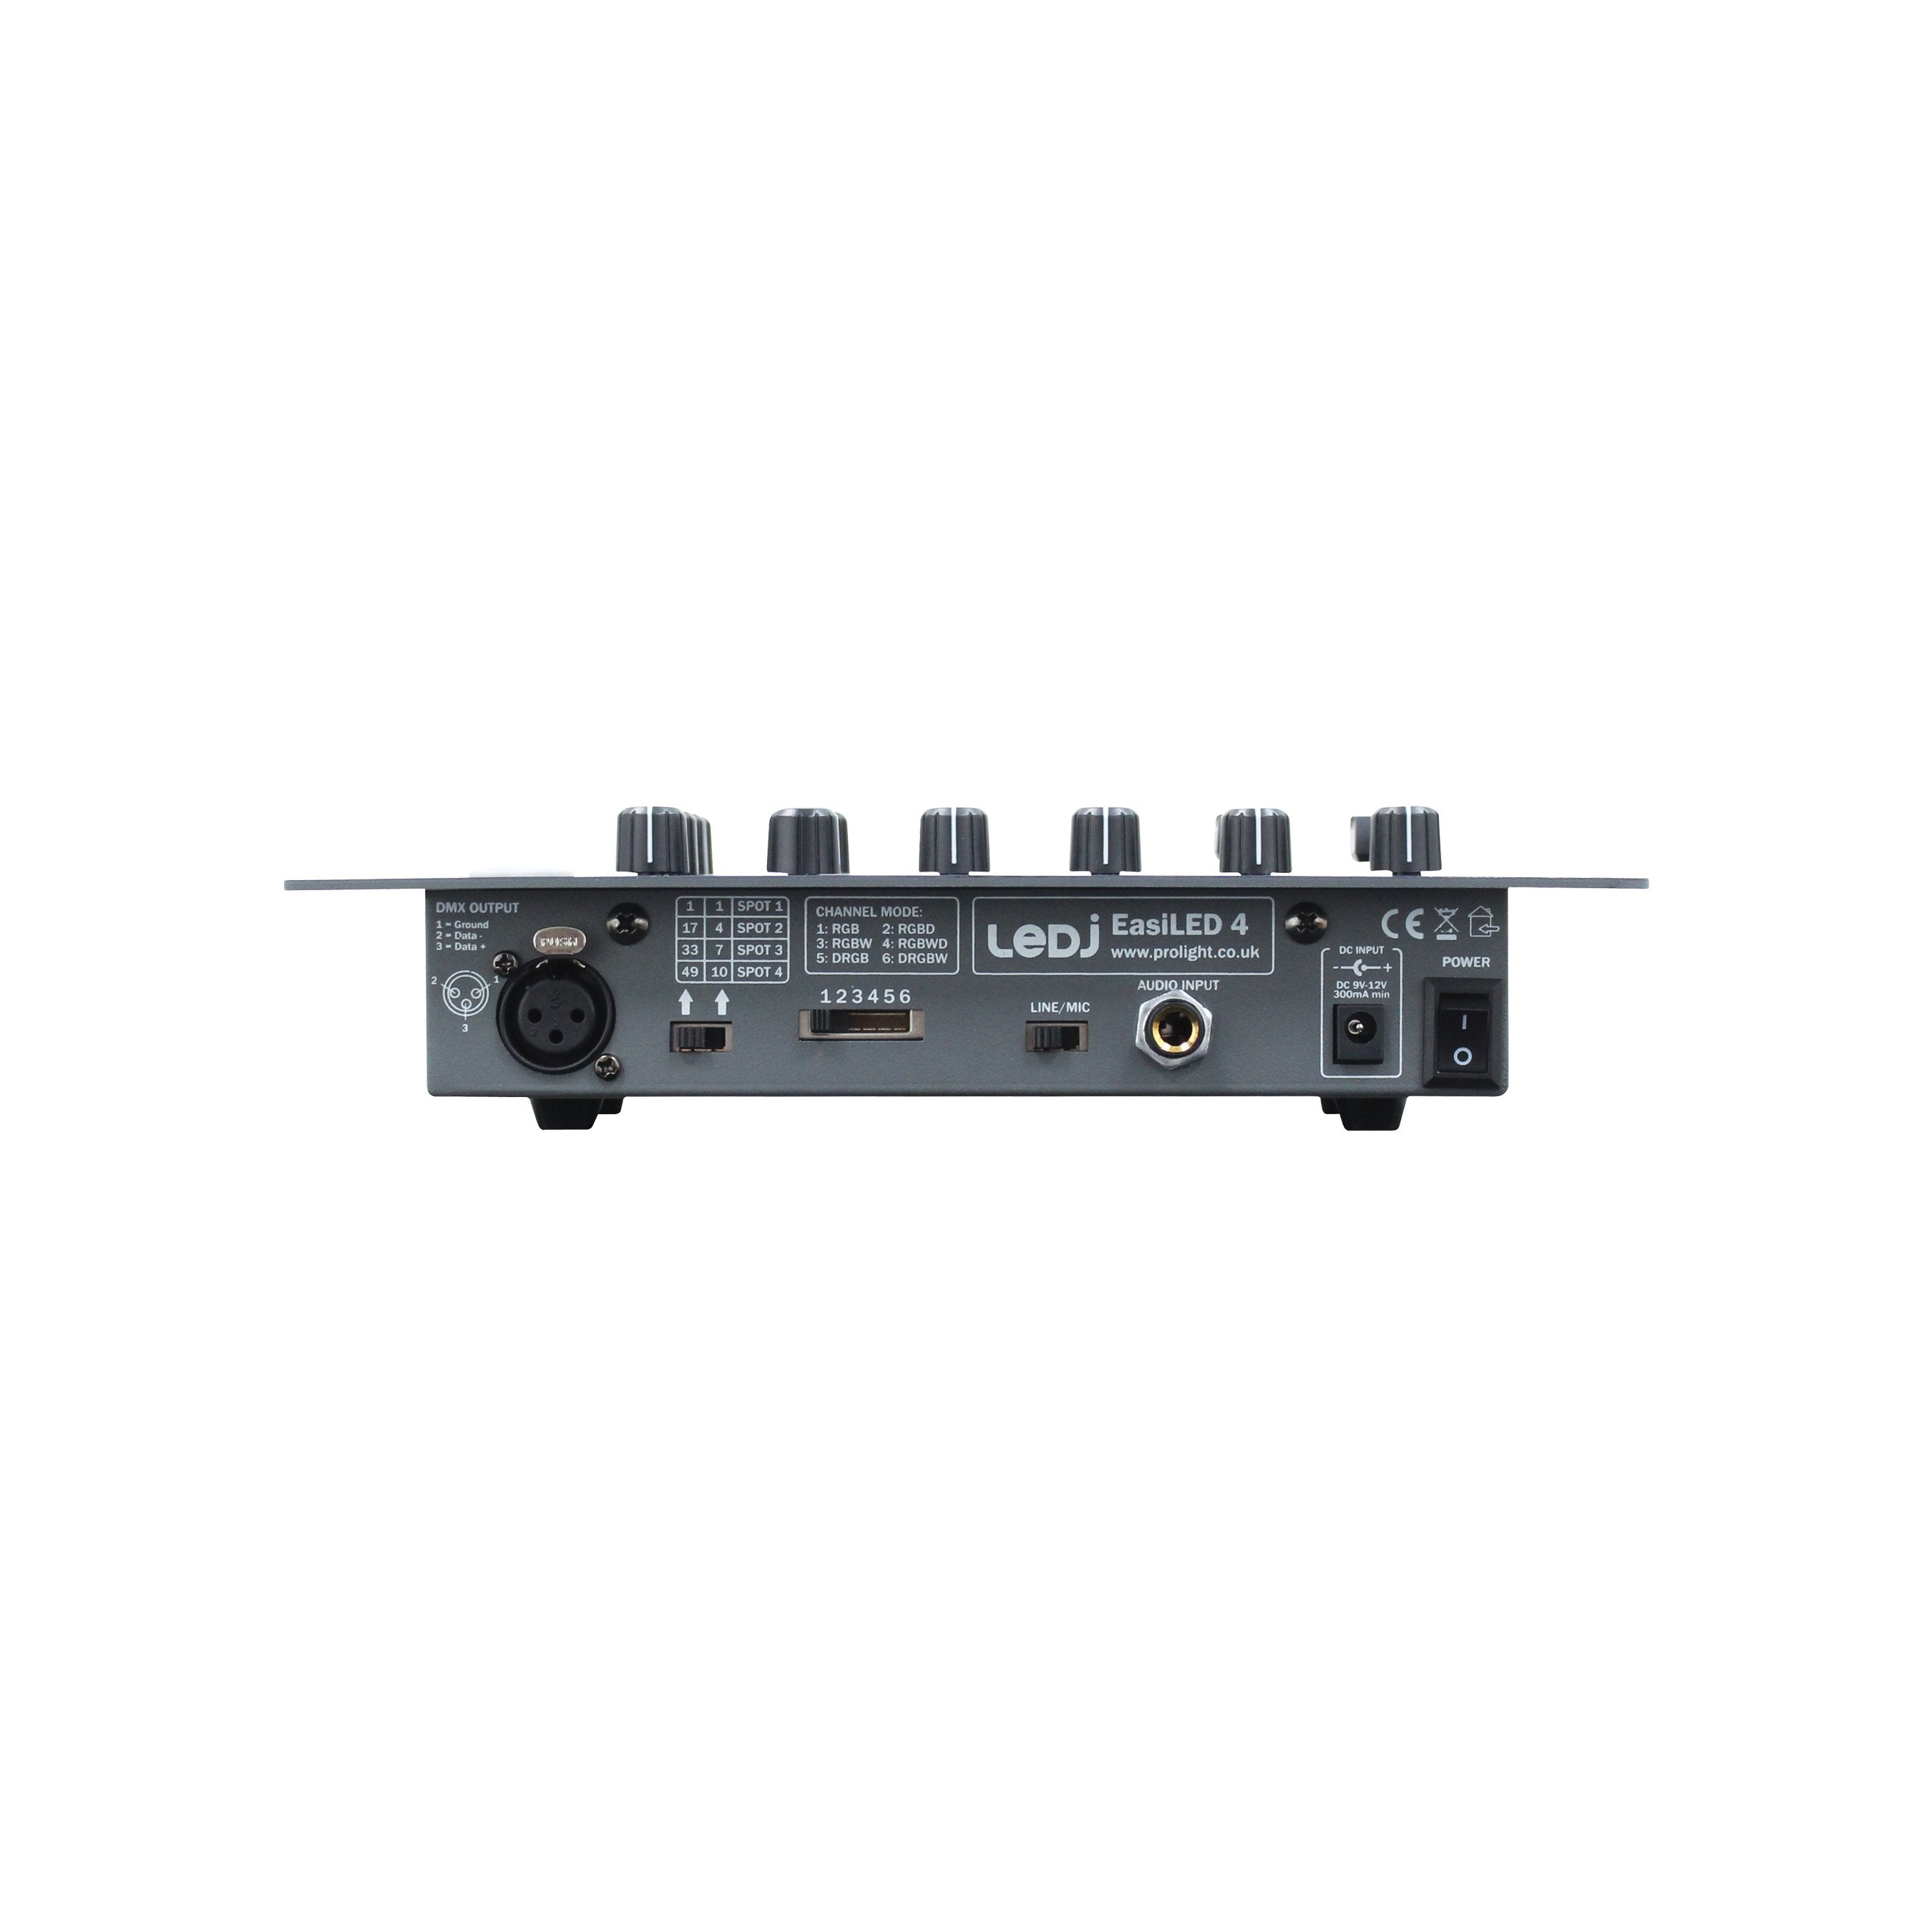 Ledj EasiLED 4 DMX Controller - DY Pro Audio